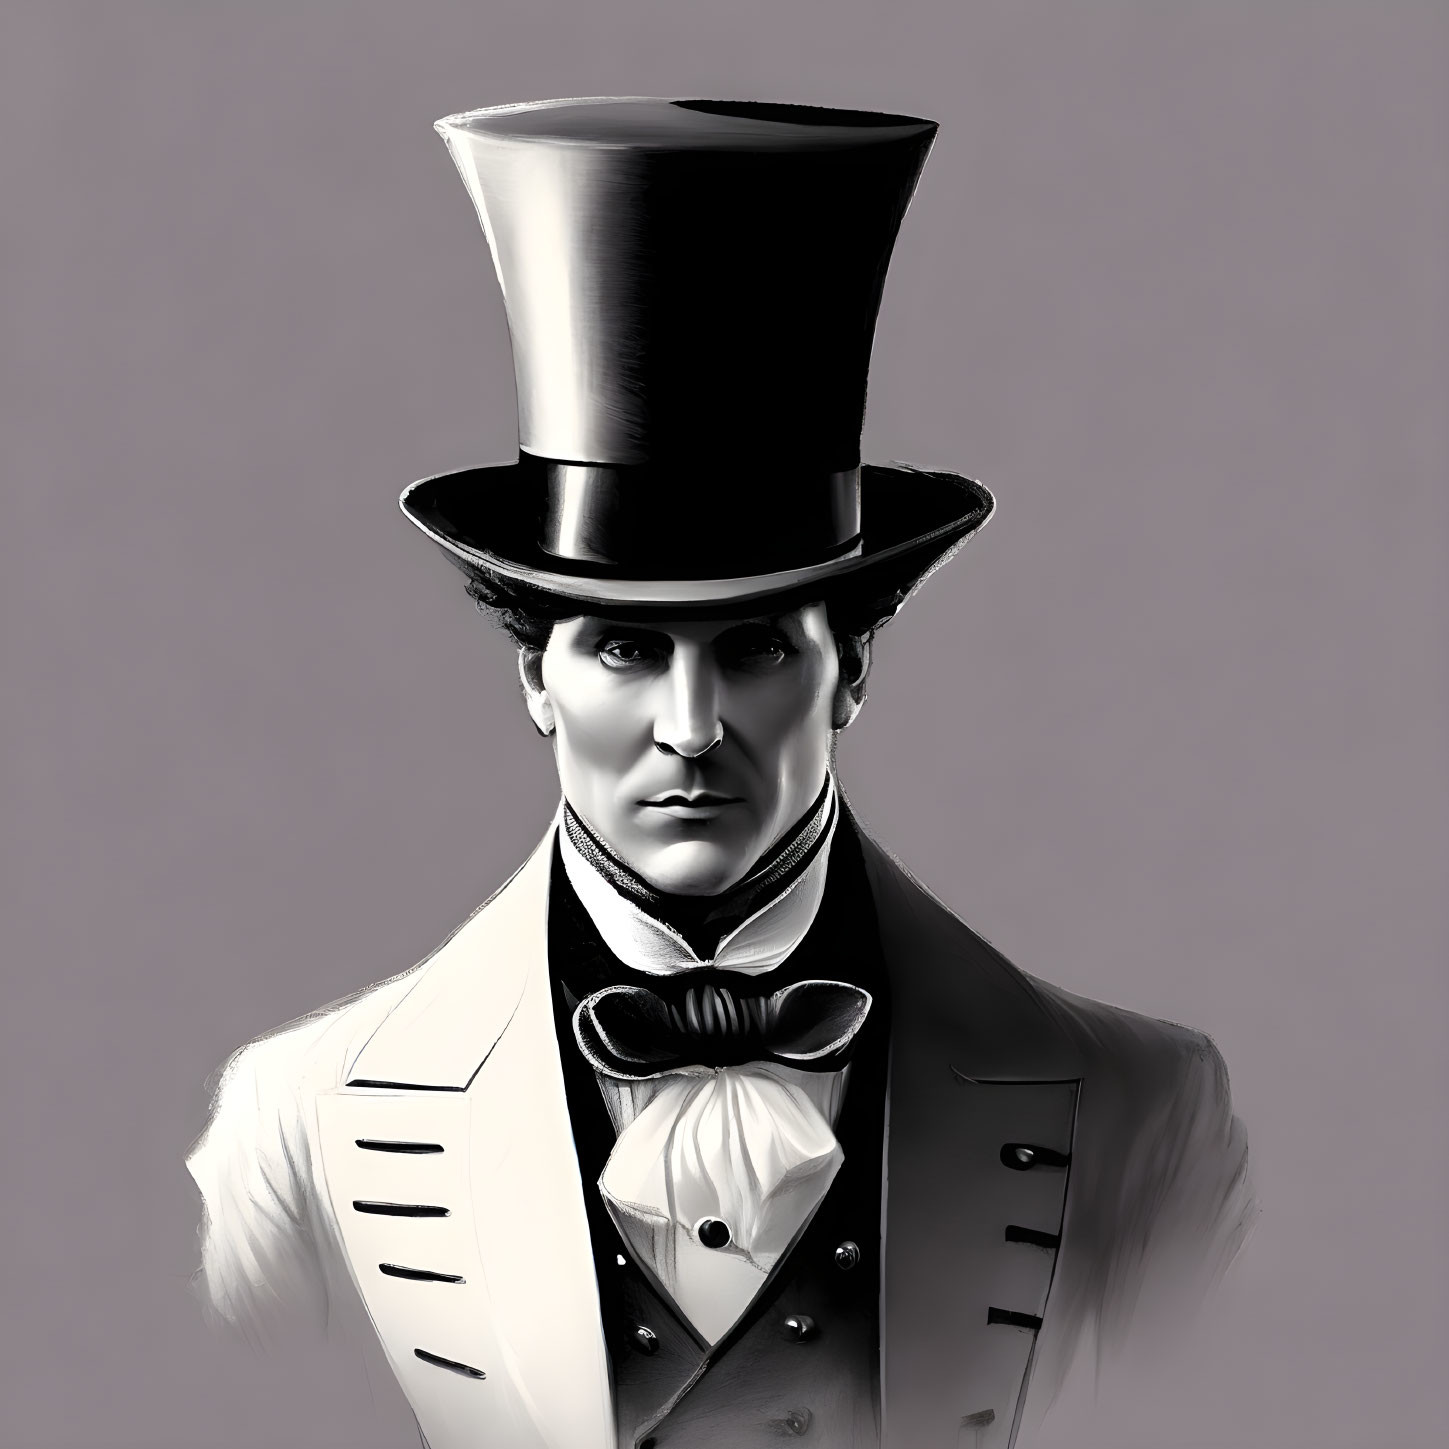 Monochromatic illustration of a man in formal attire